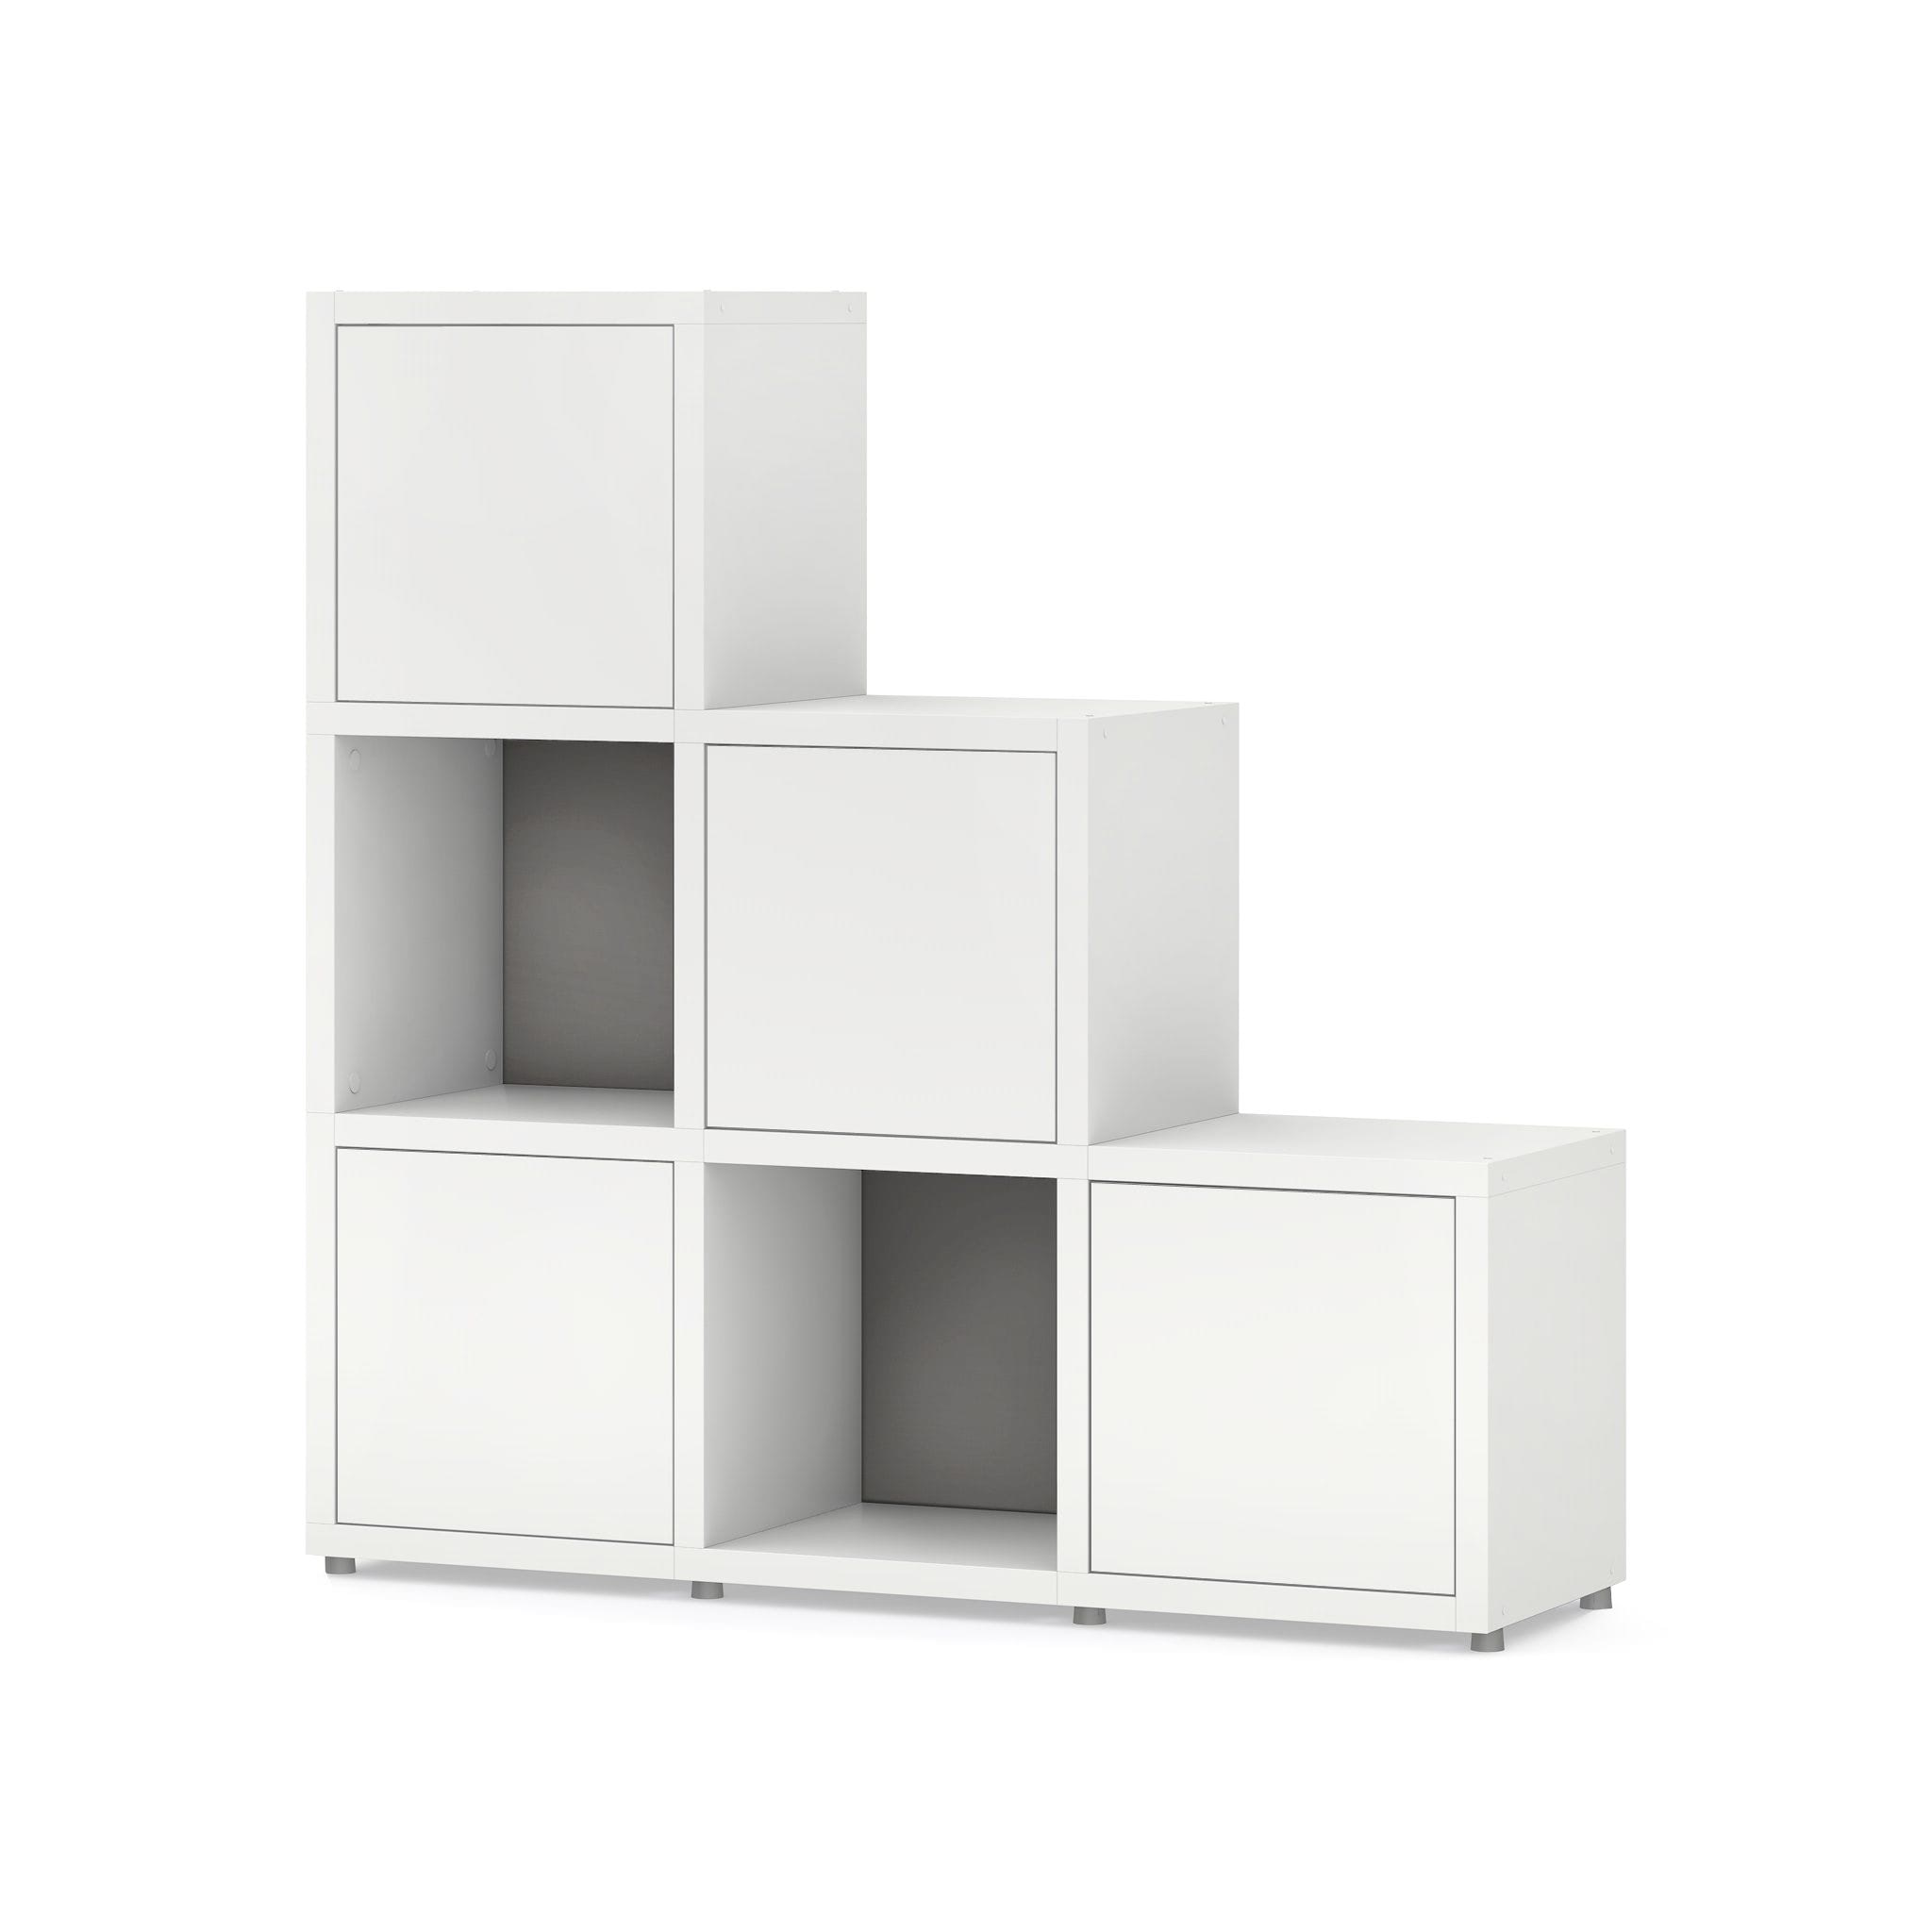 BOON Cube Storage Shelf Corner 3x3 Accessorized